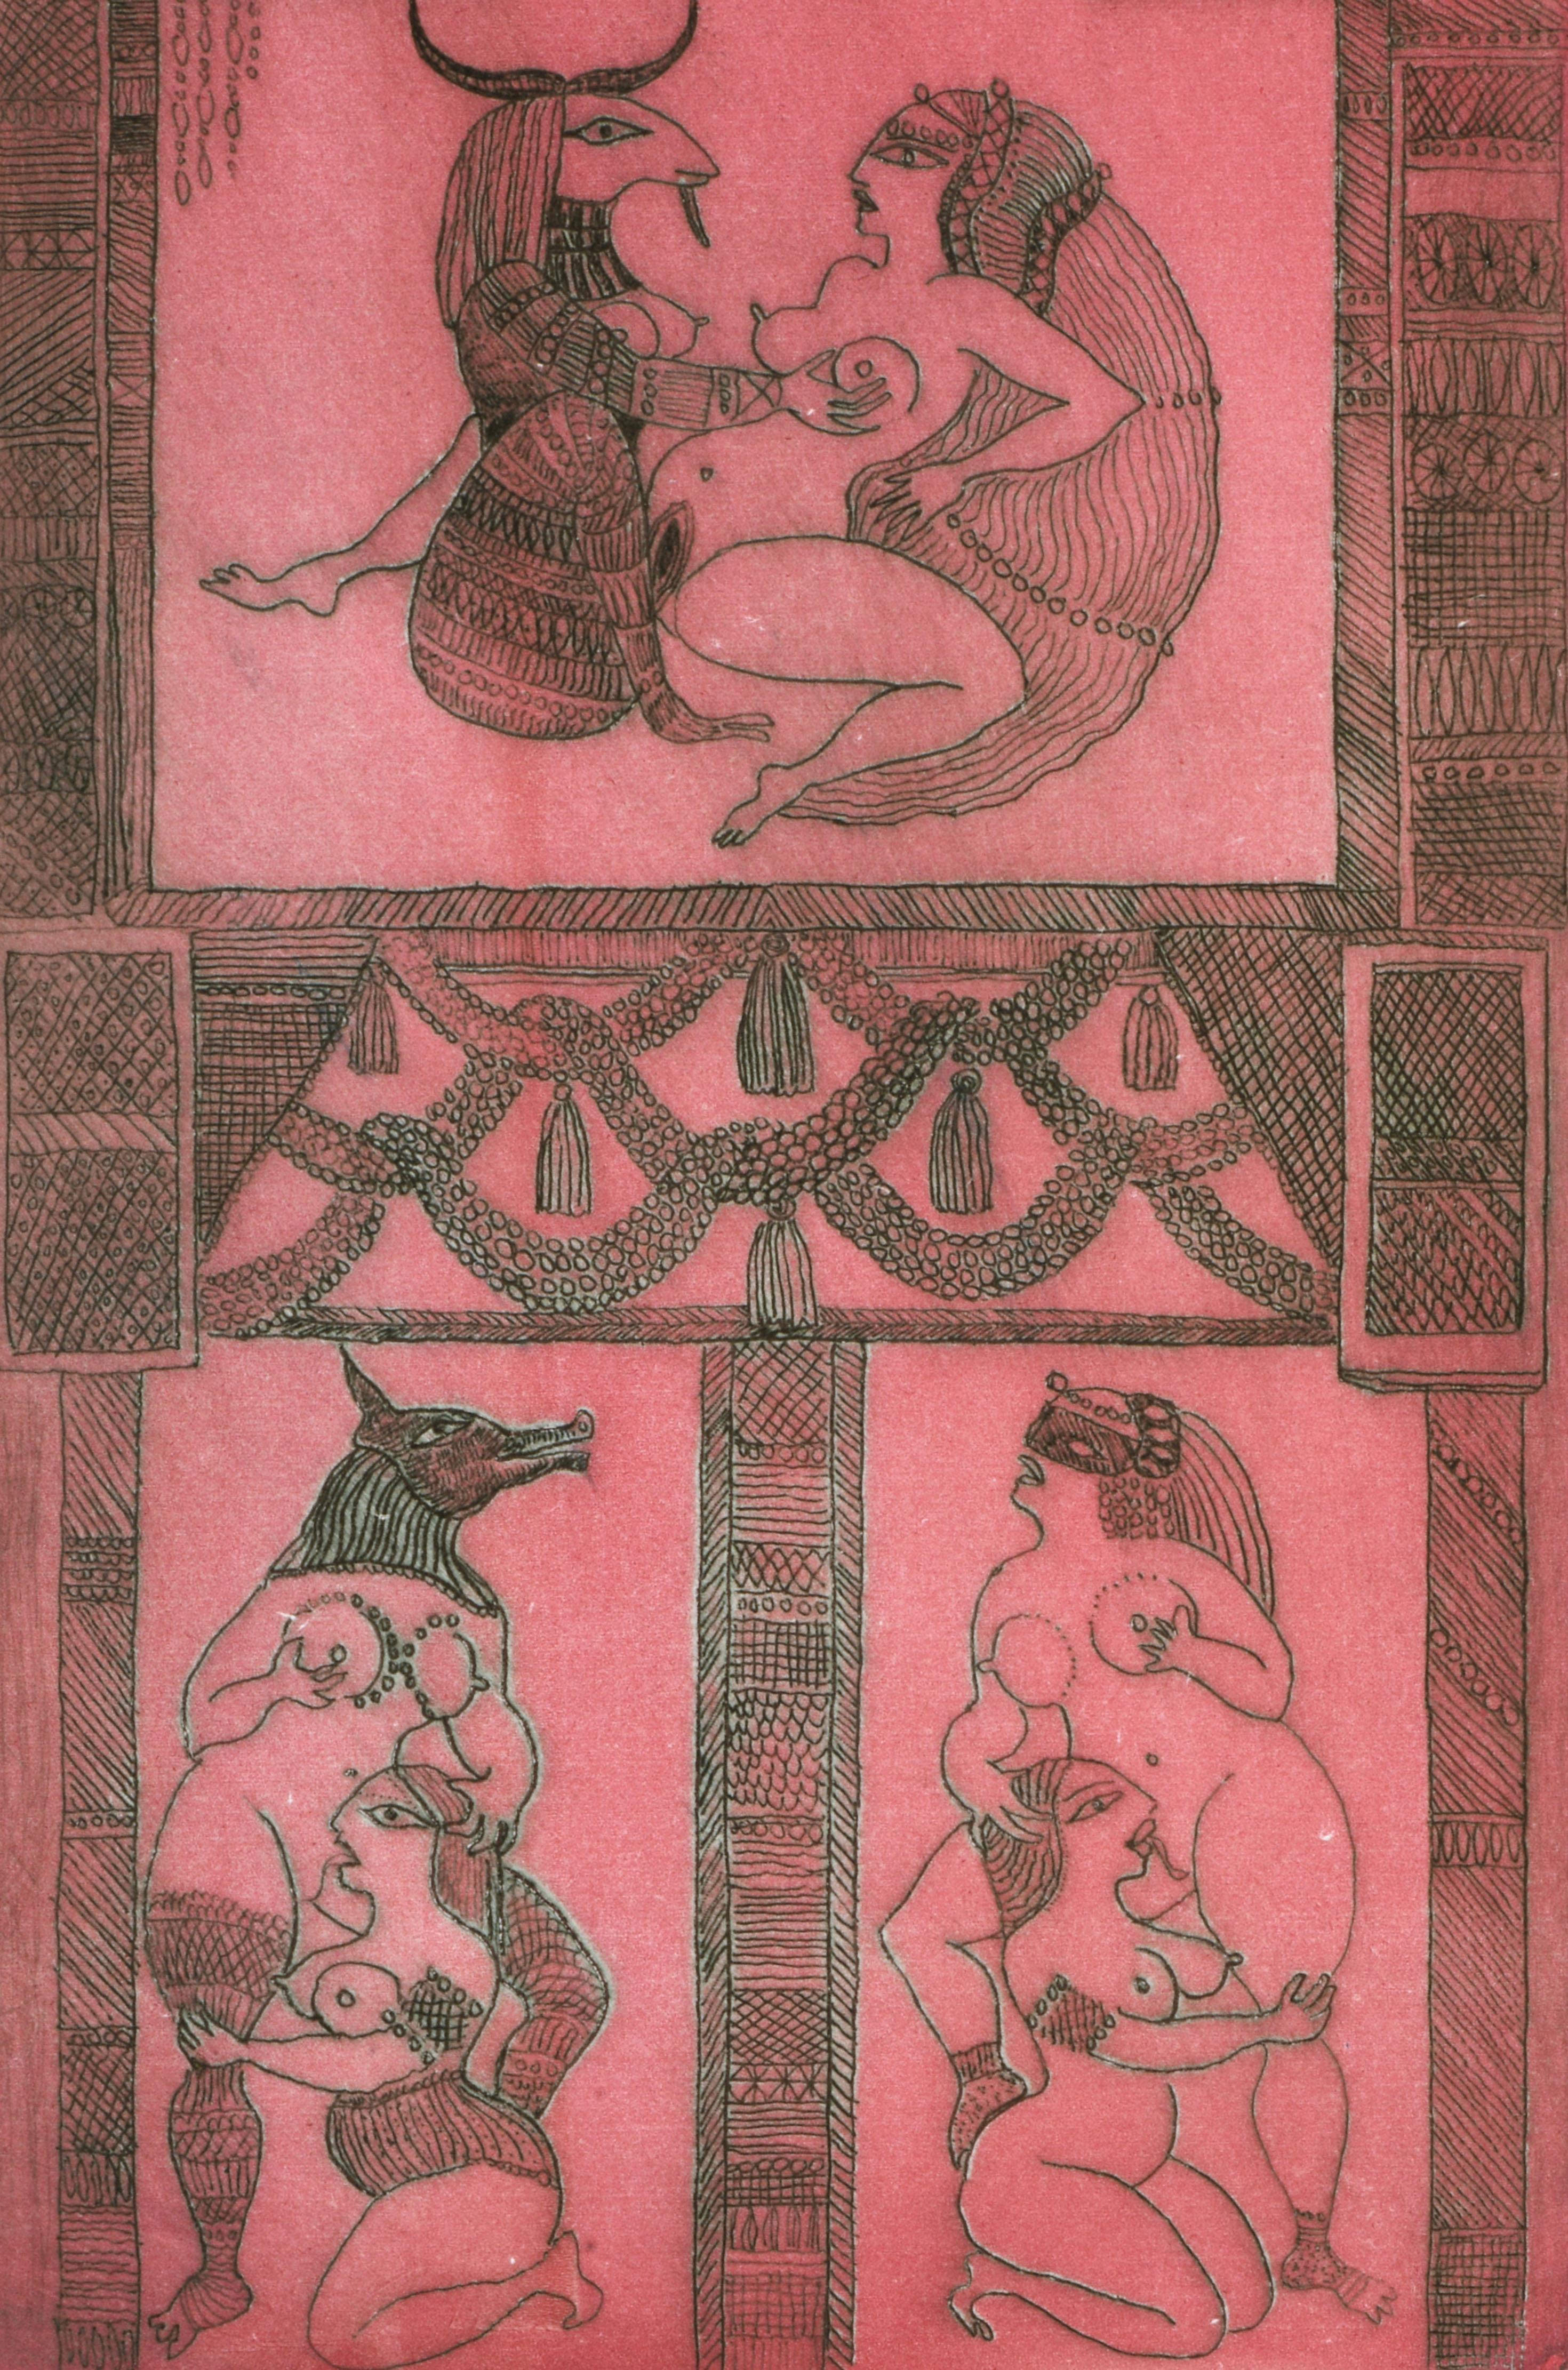 Women Loving Woomen - Pink Animal Print by Noche Crist